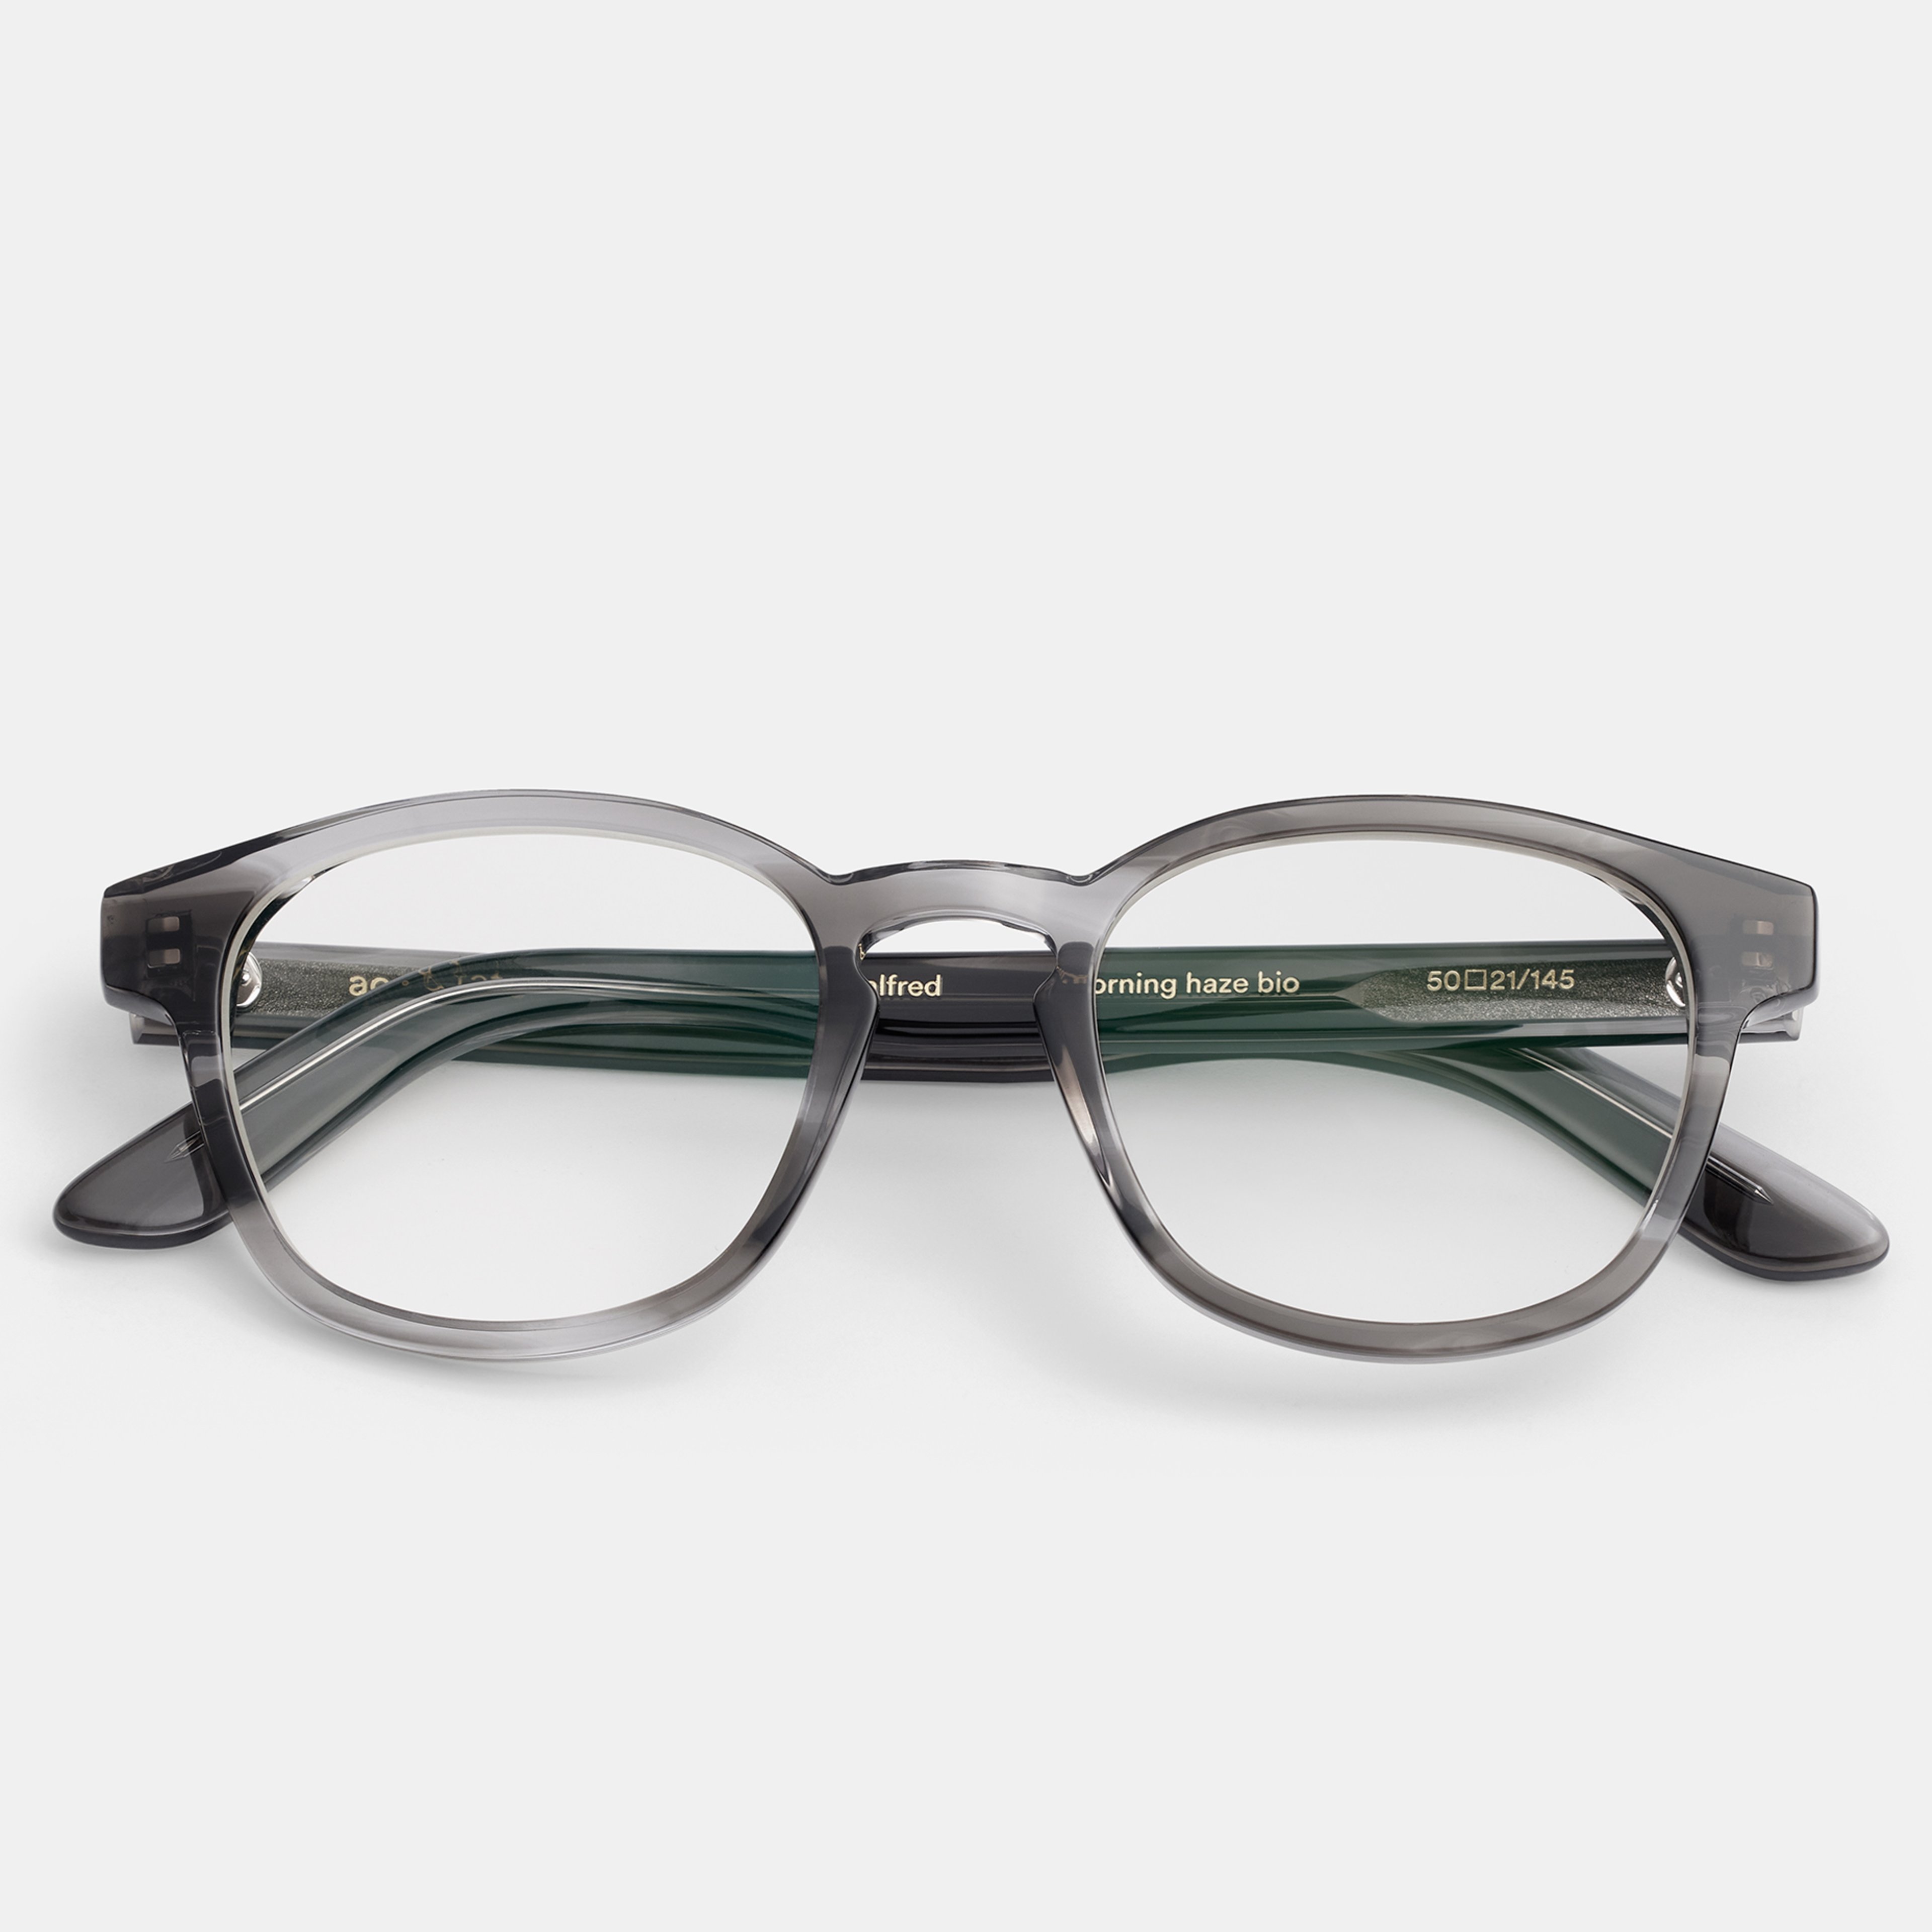 Ace & Tate Glasses | Square Bio acetate in Grey